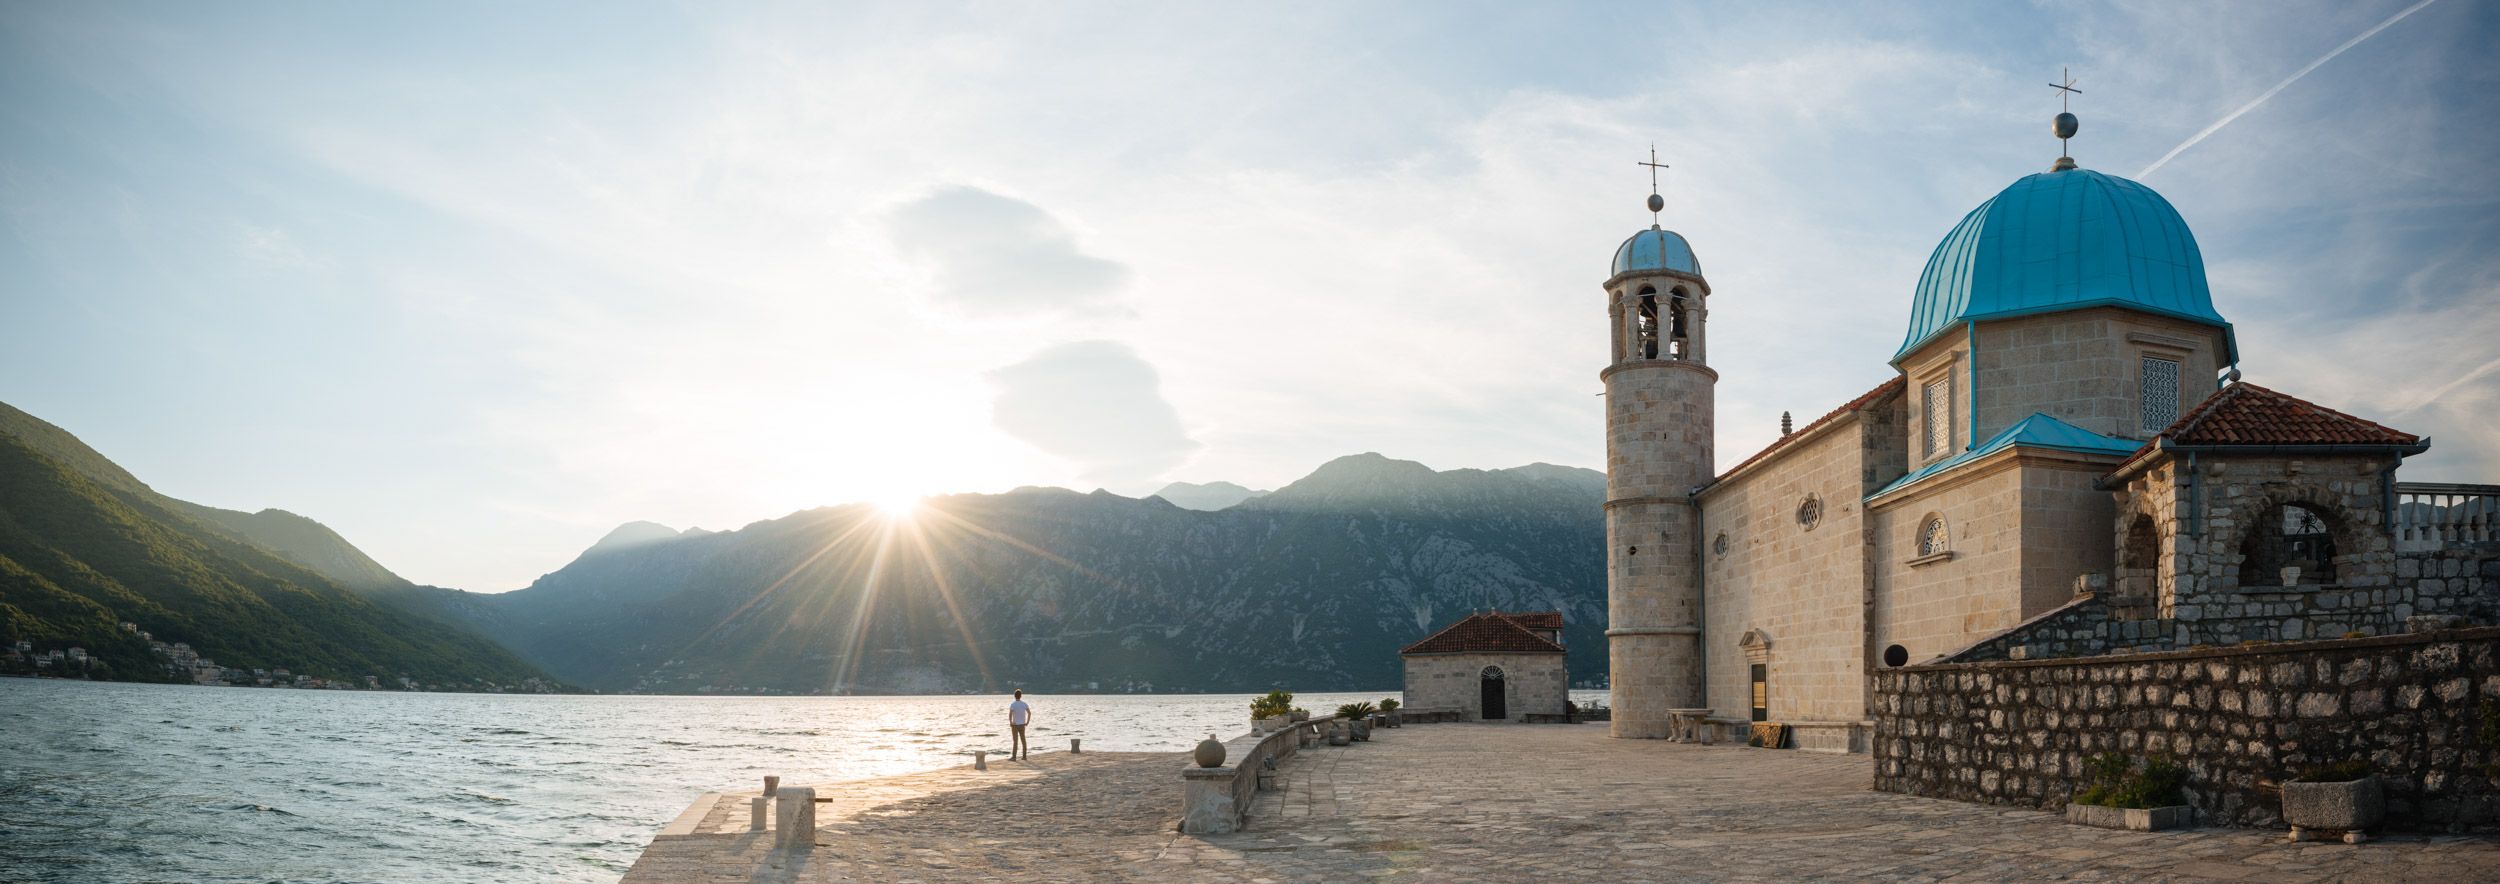 catholic-church-our-lady-of-the-rocks-island-kotor-lake-montenegro-balkans